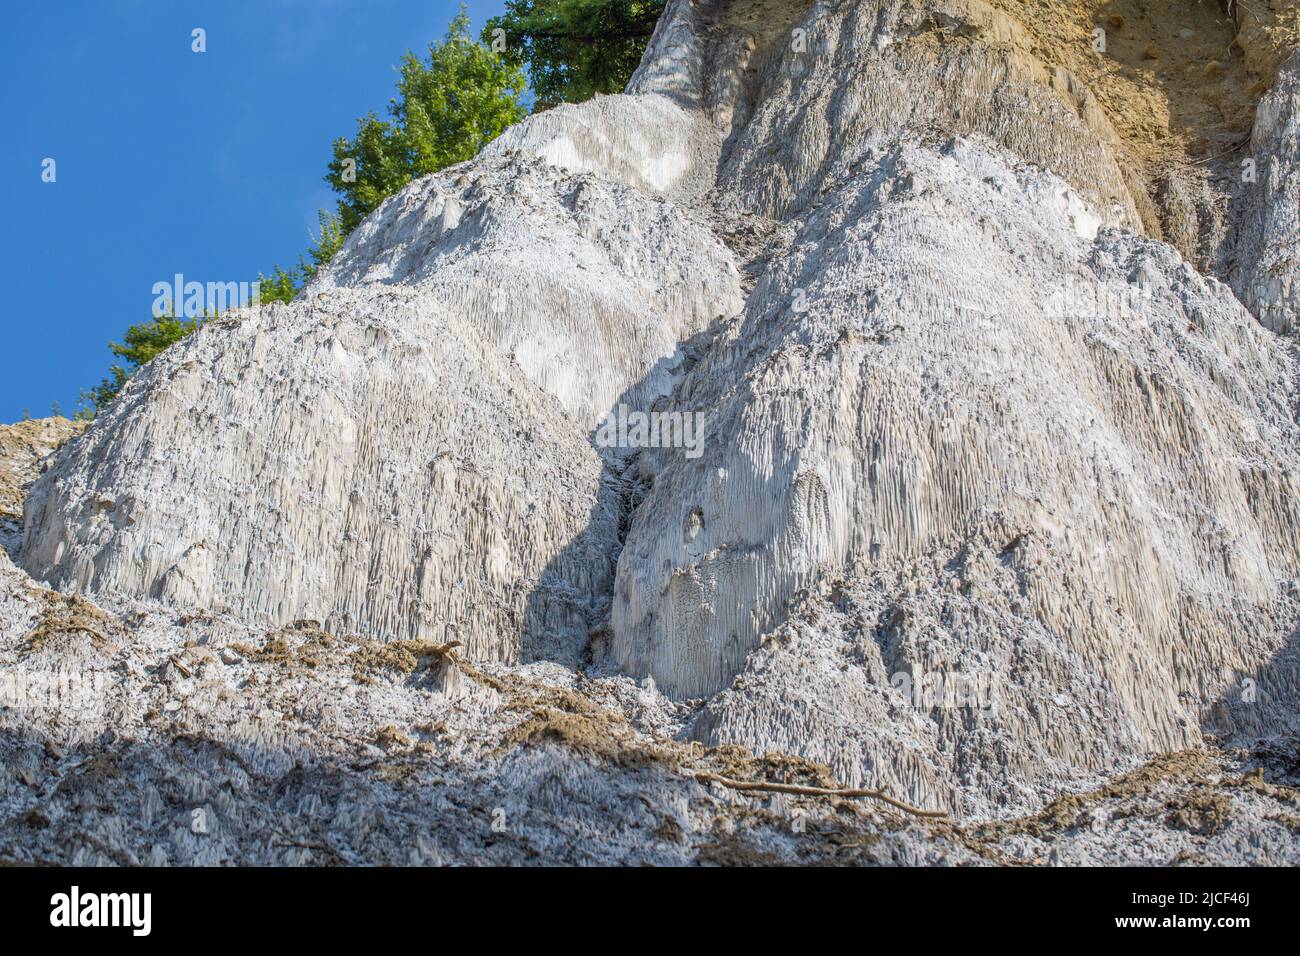 Grandes formaciones de sal cristalizada. Fuera de la mina de sal de Praid, dentro del cañón de sal de Praid. Foto de stock